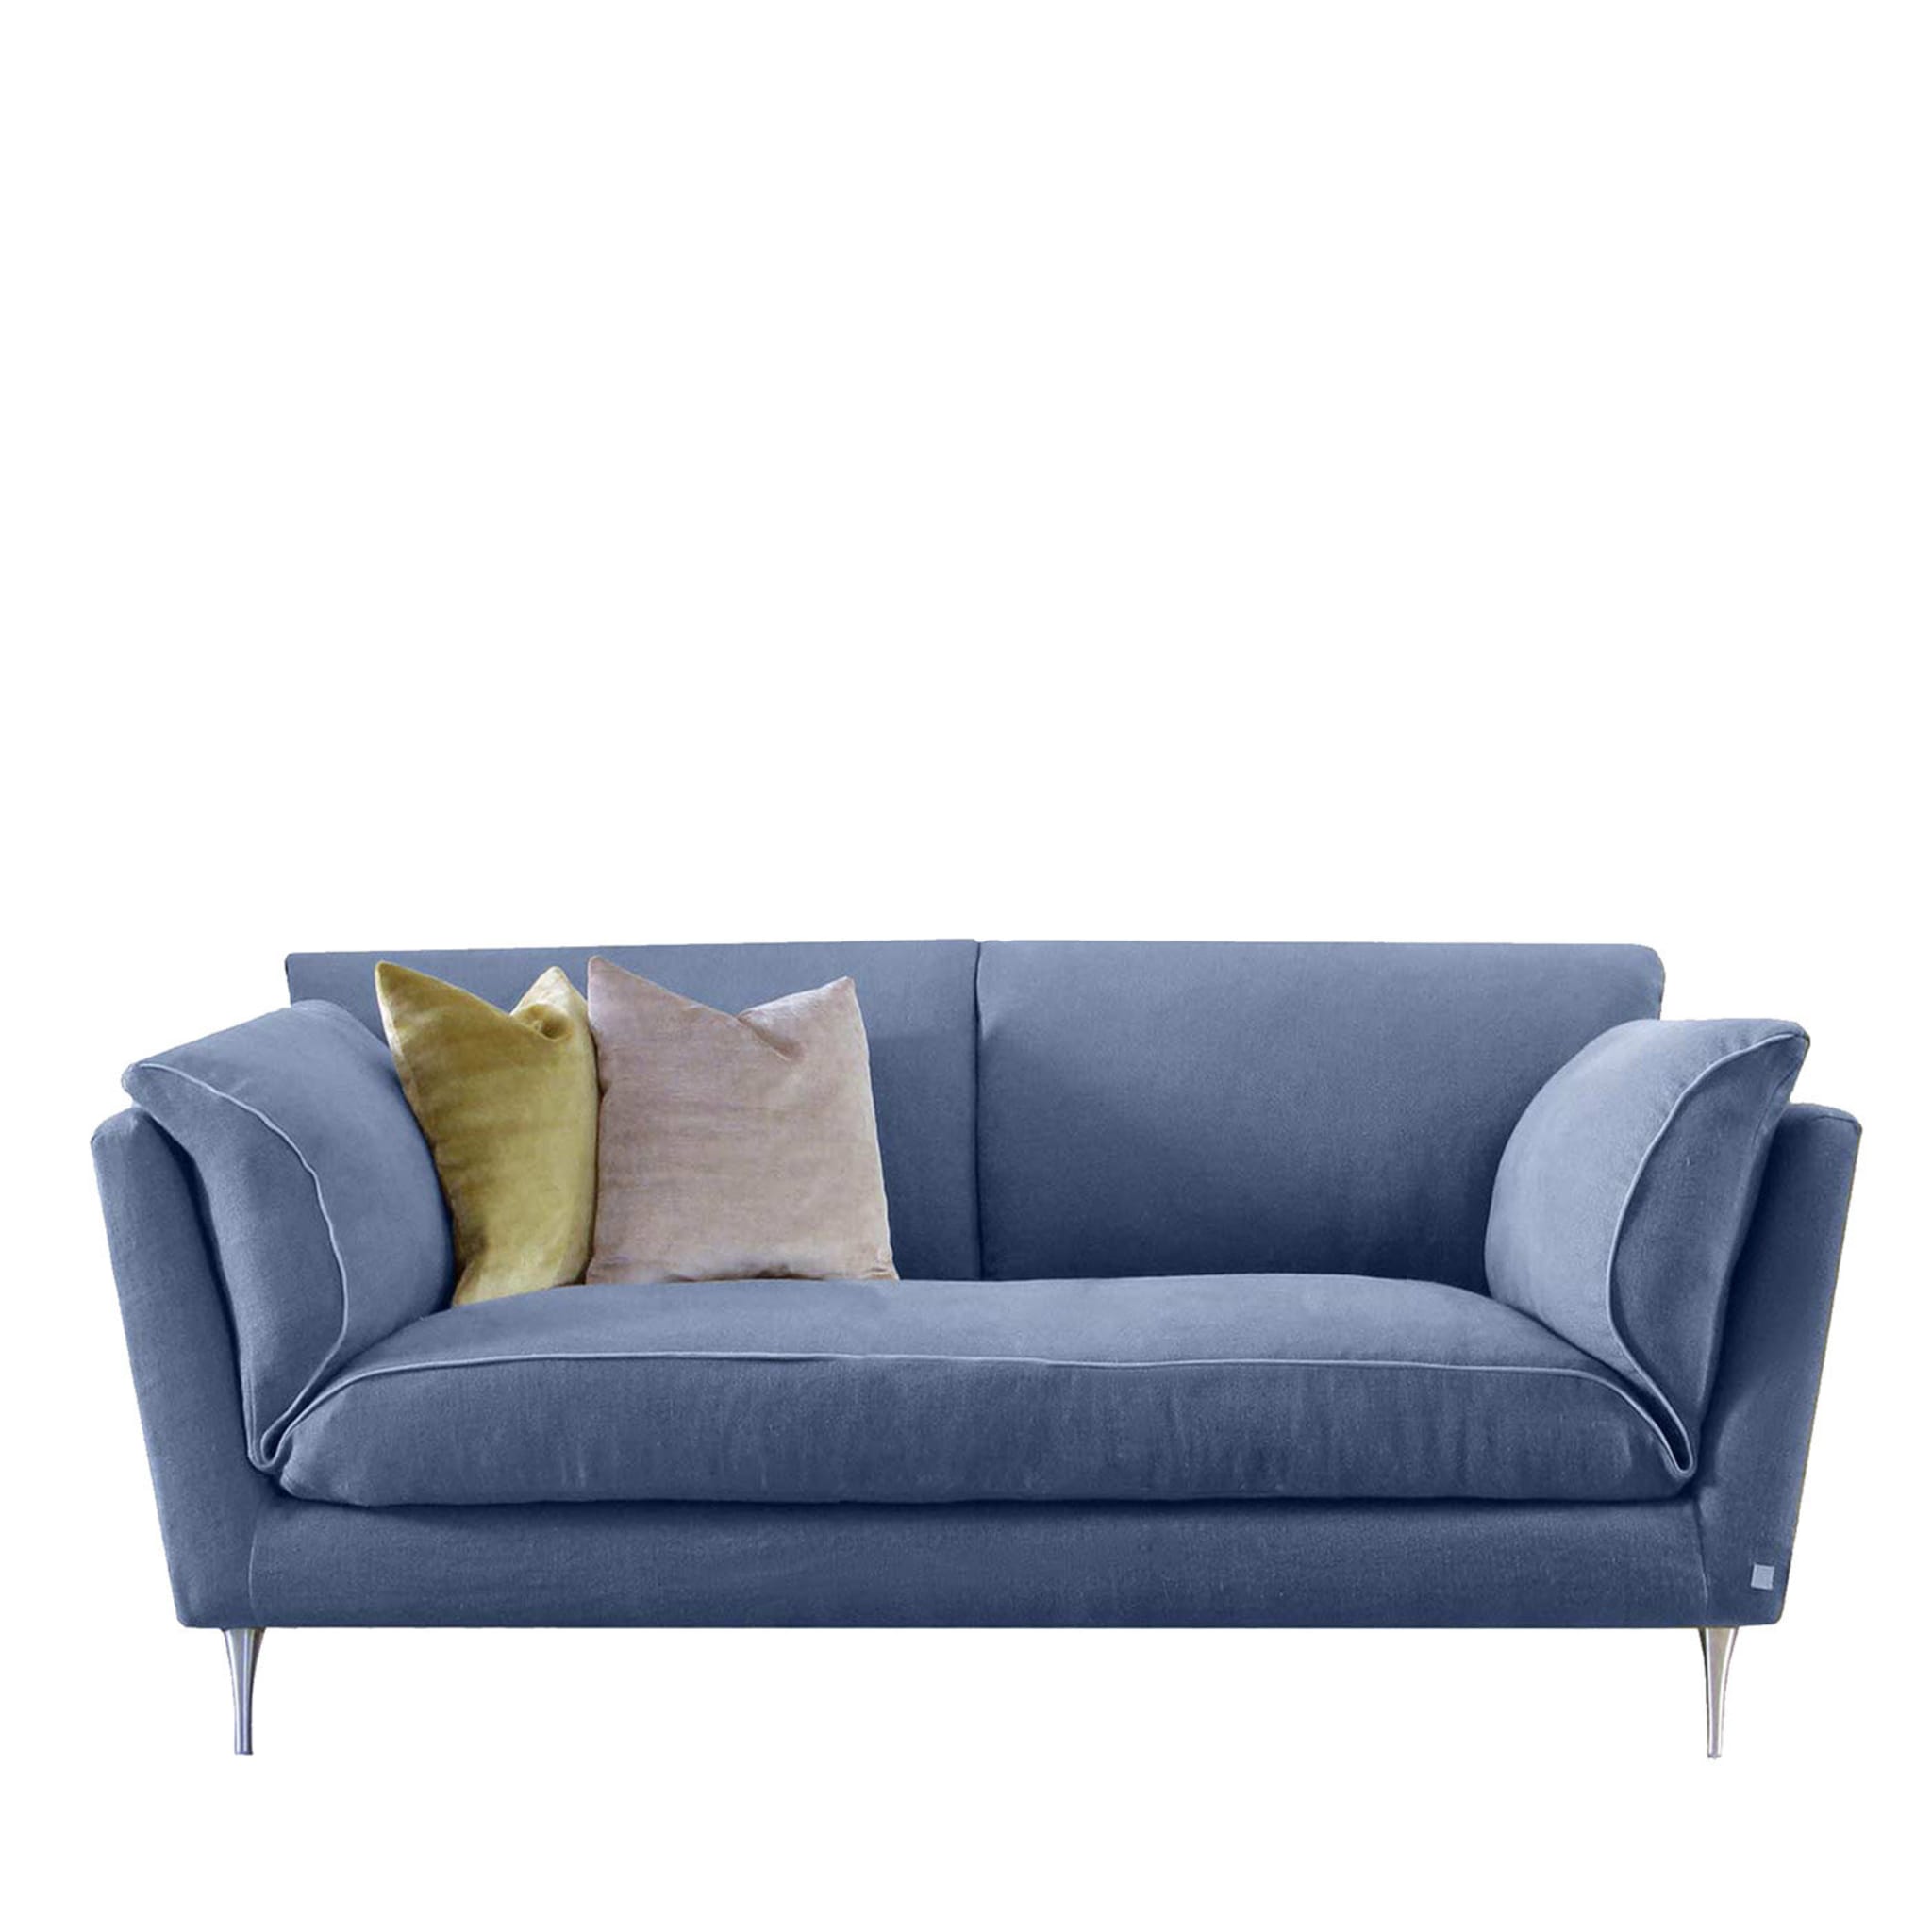 Casquet Natural Gray Sofa by DDP Studio - Main view